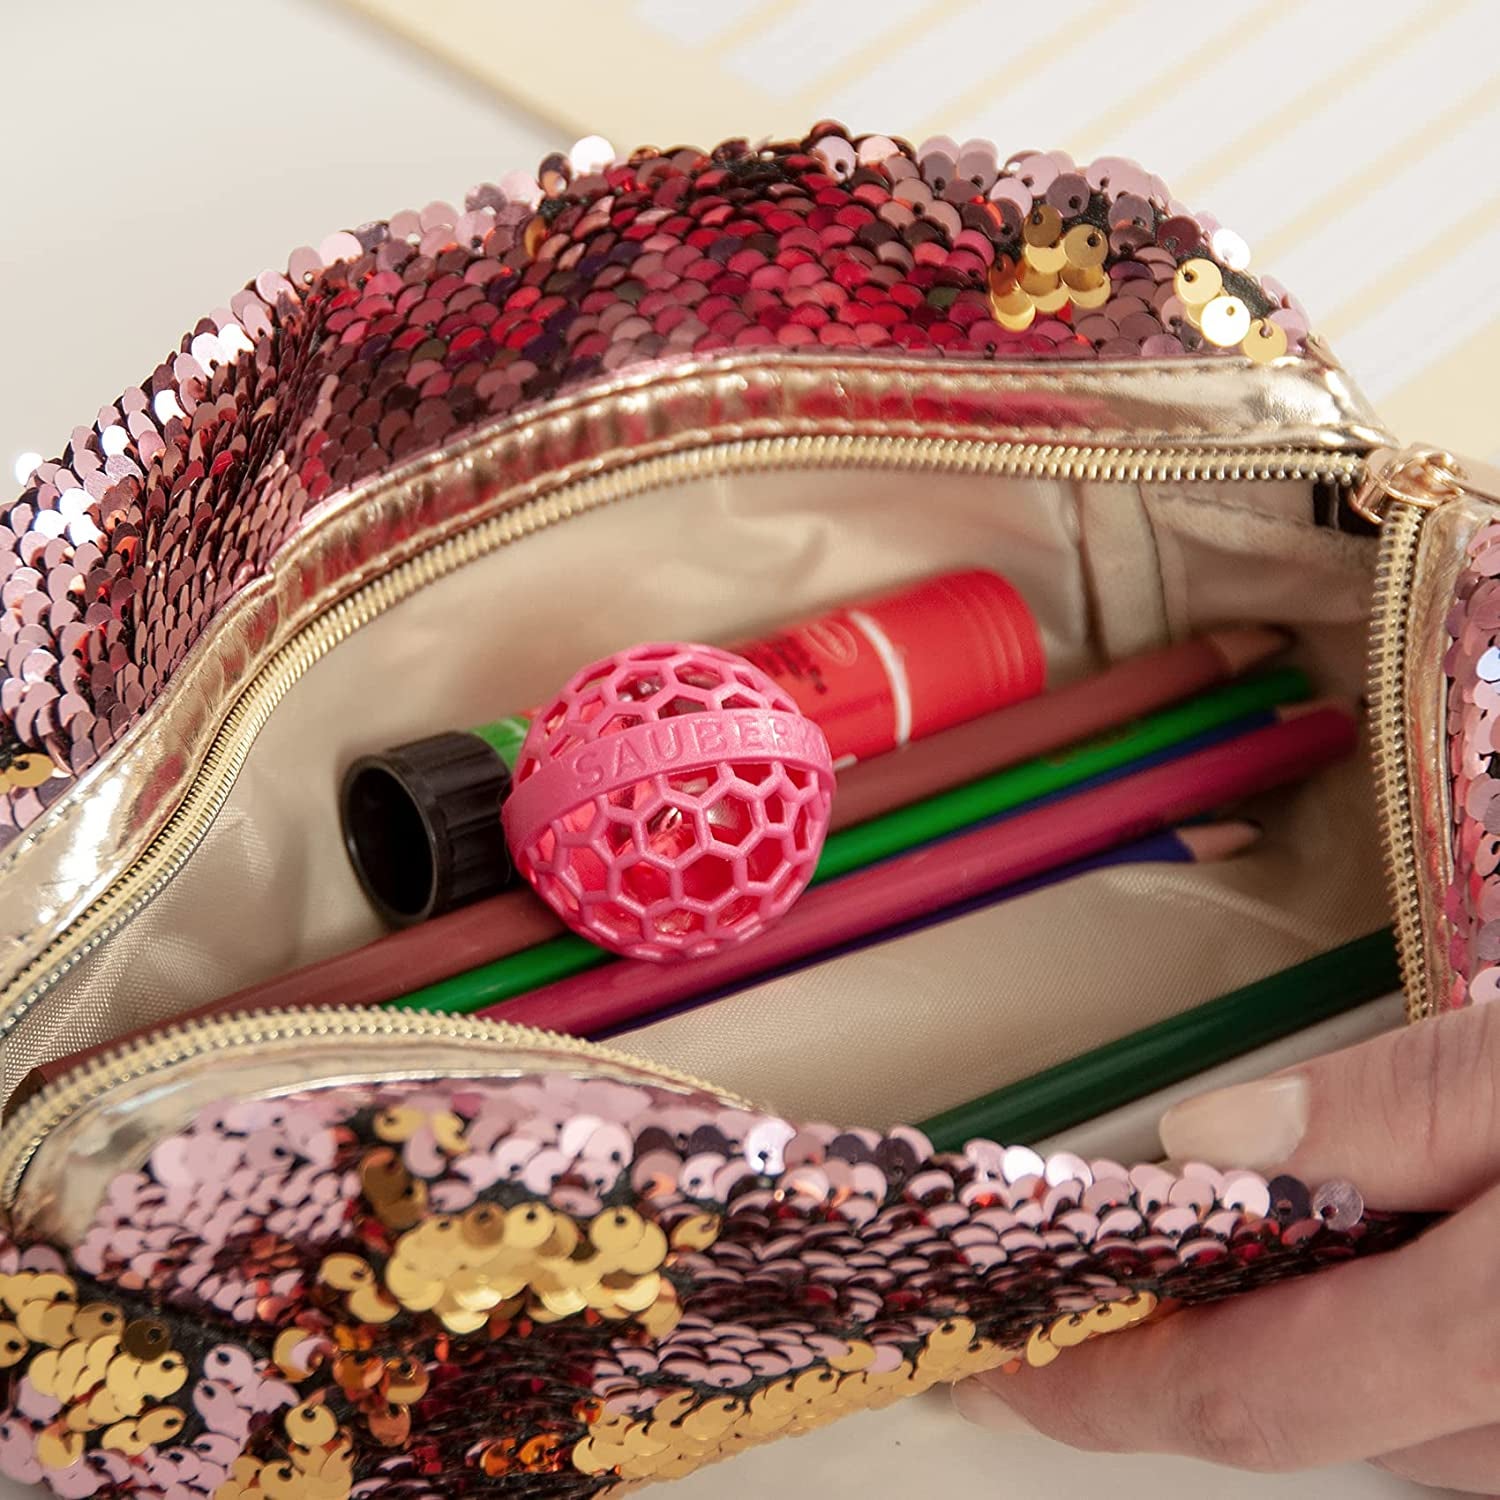 Fun things to put in your handbag